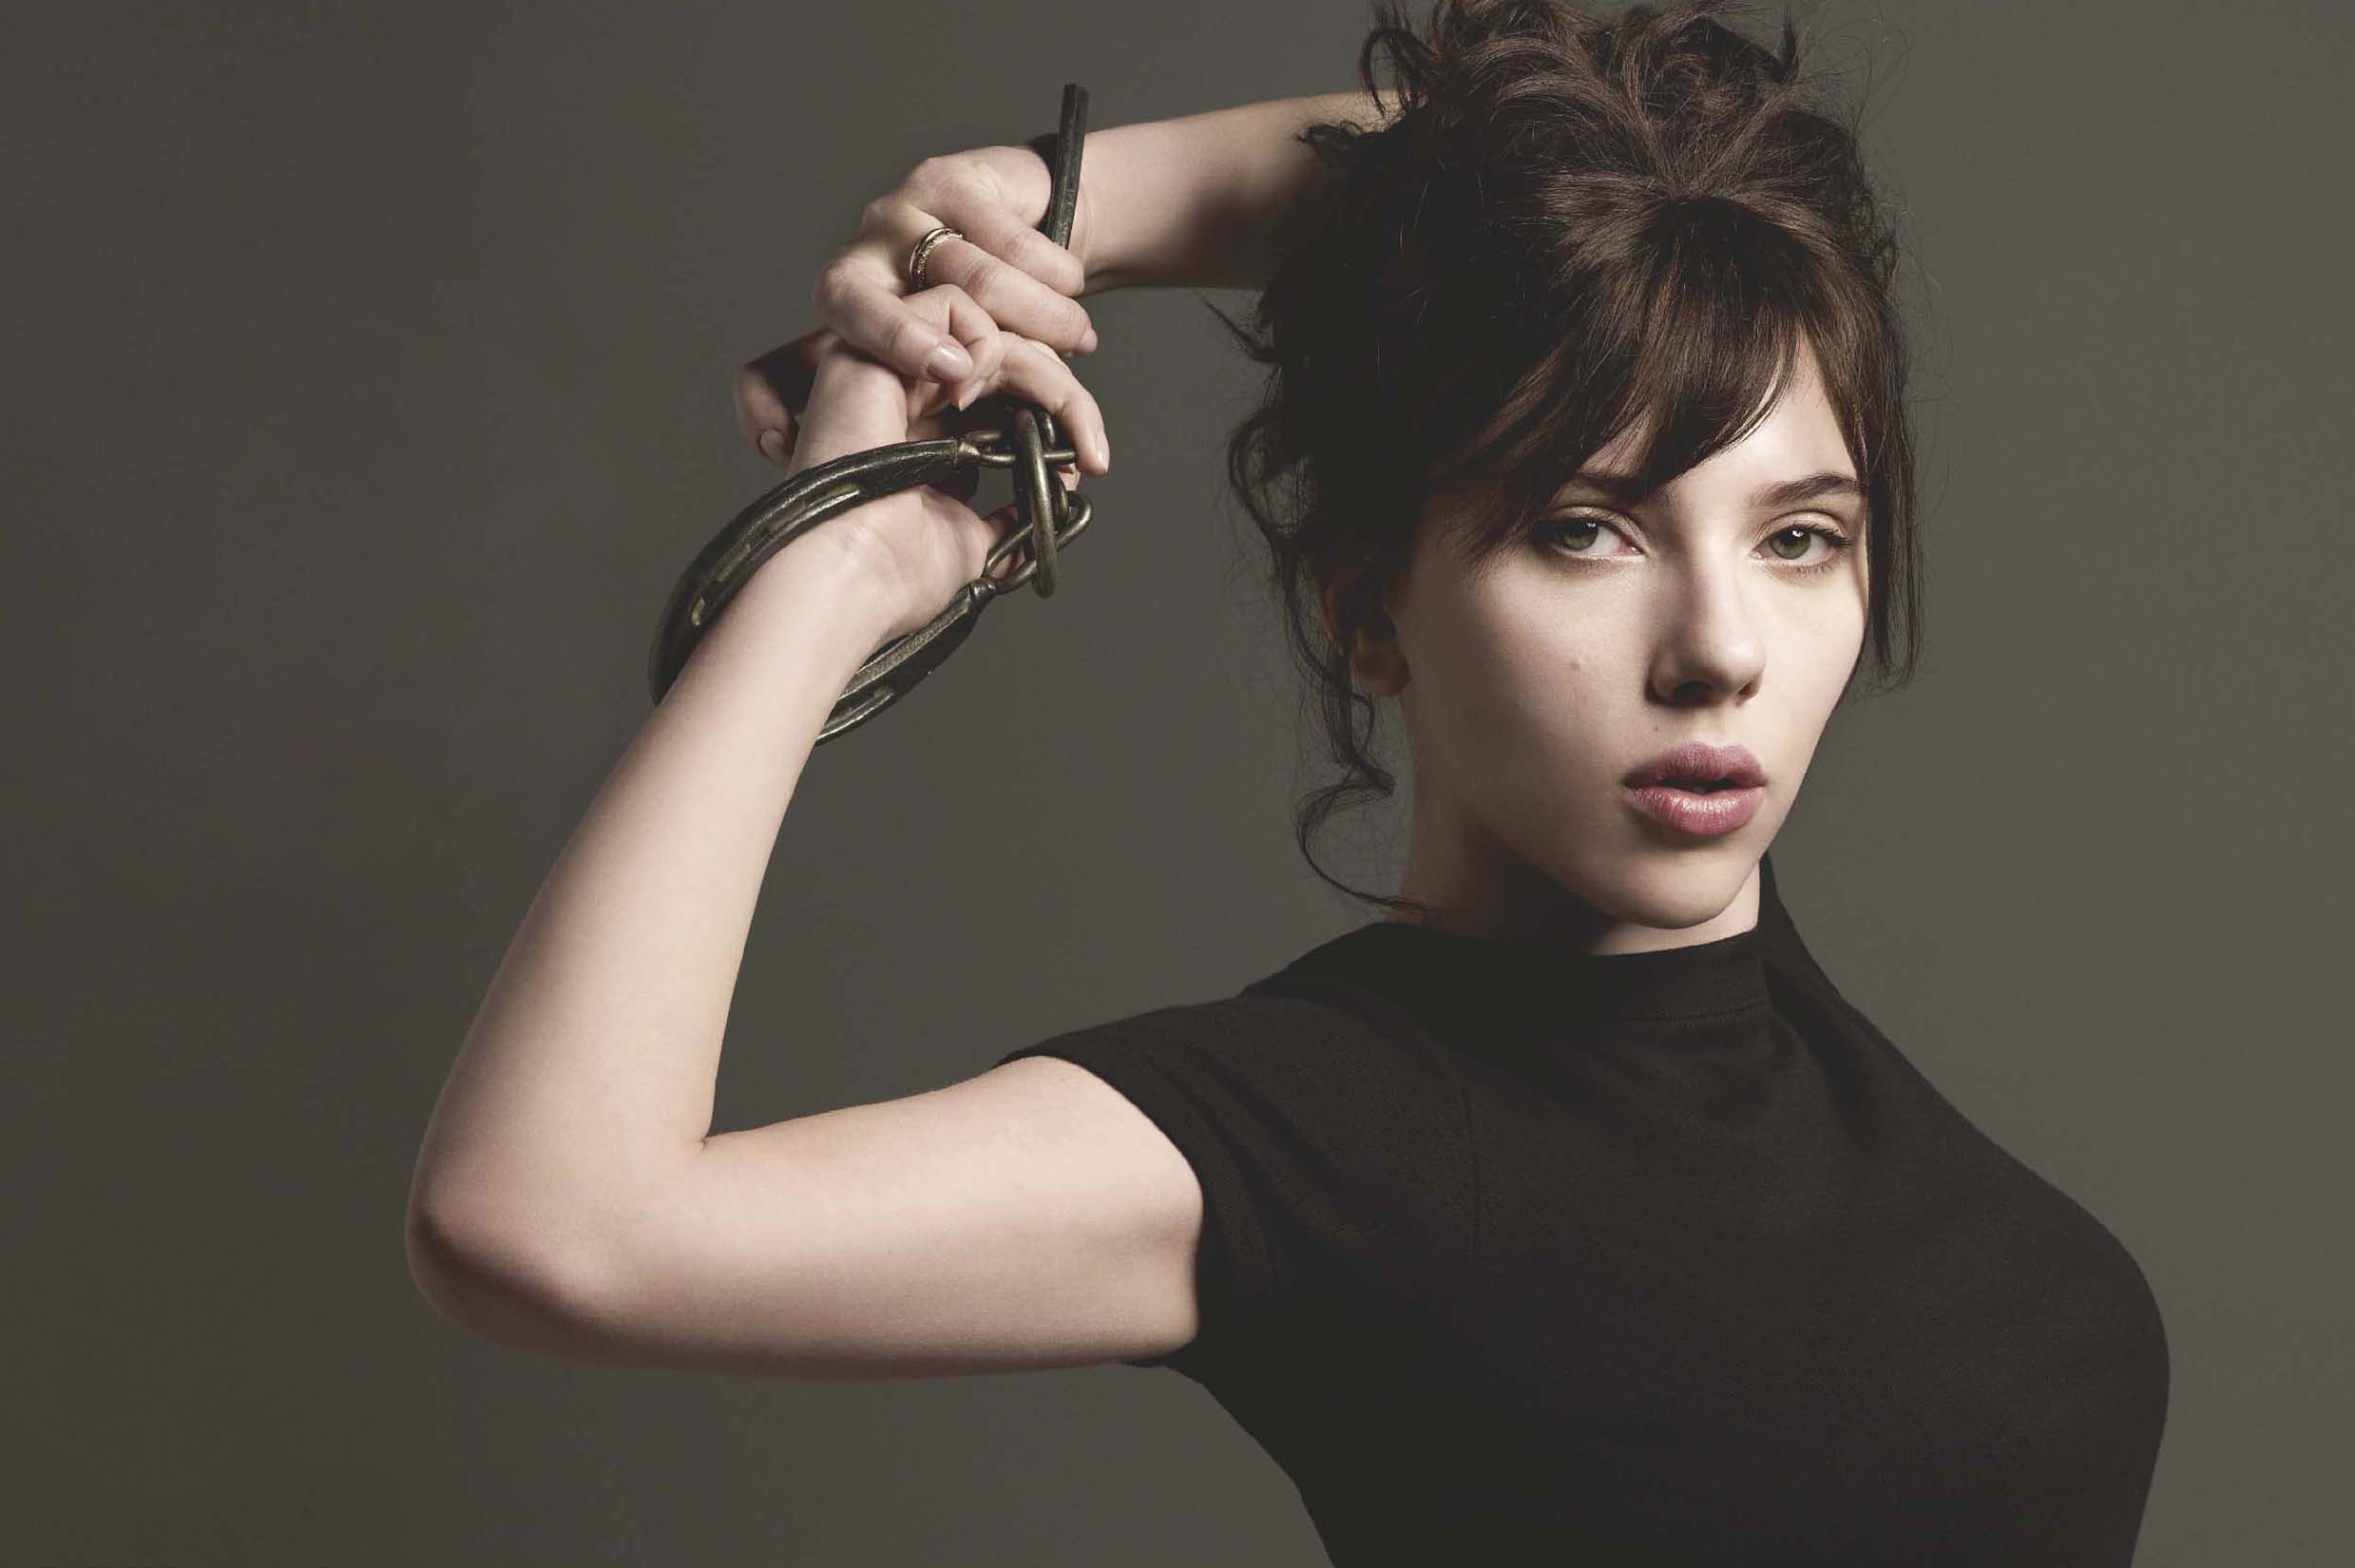 Brutes Women Scarlett Johansson Handcuffs Wallpaper